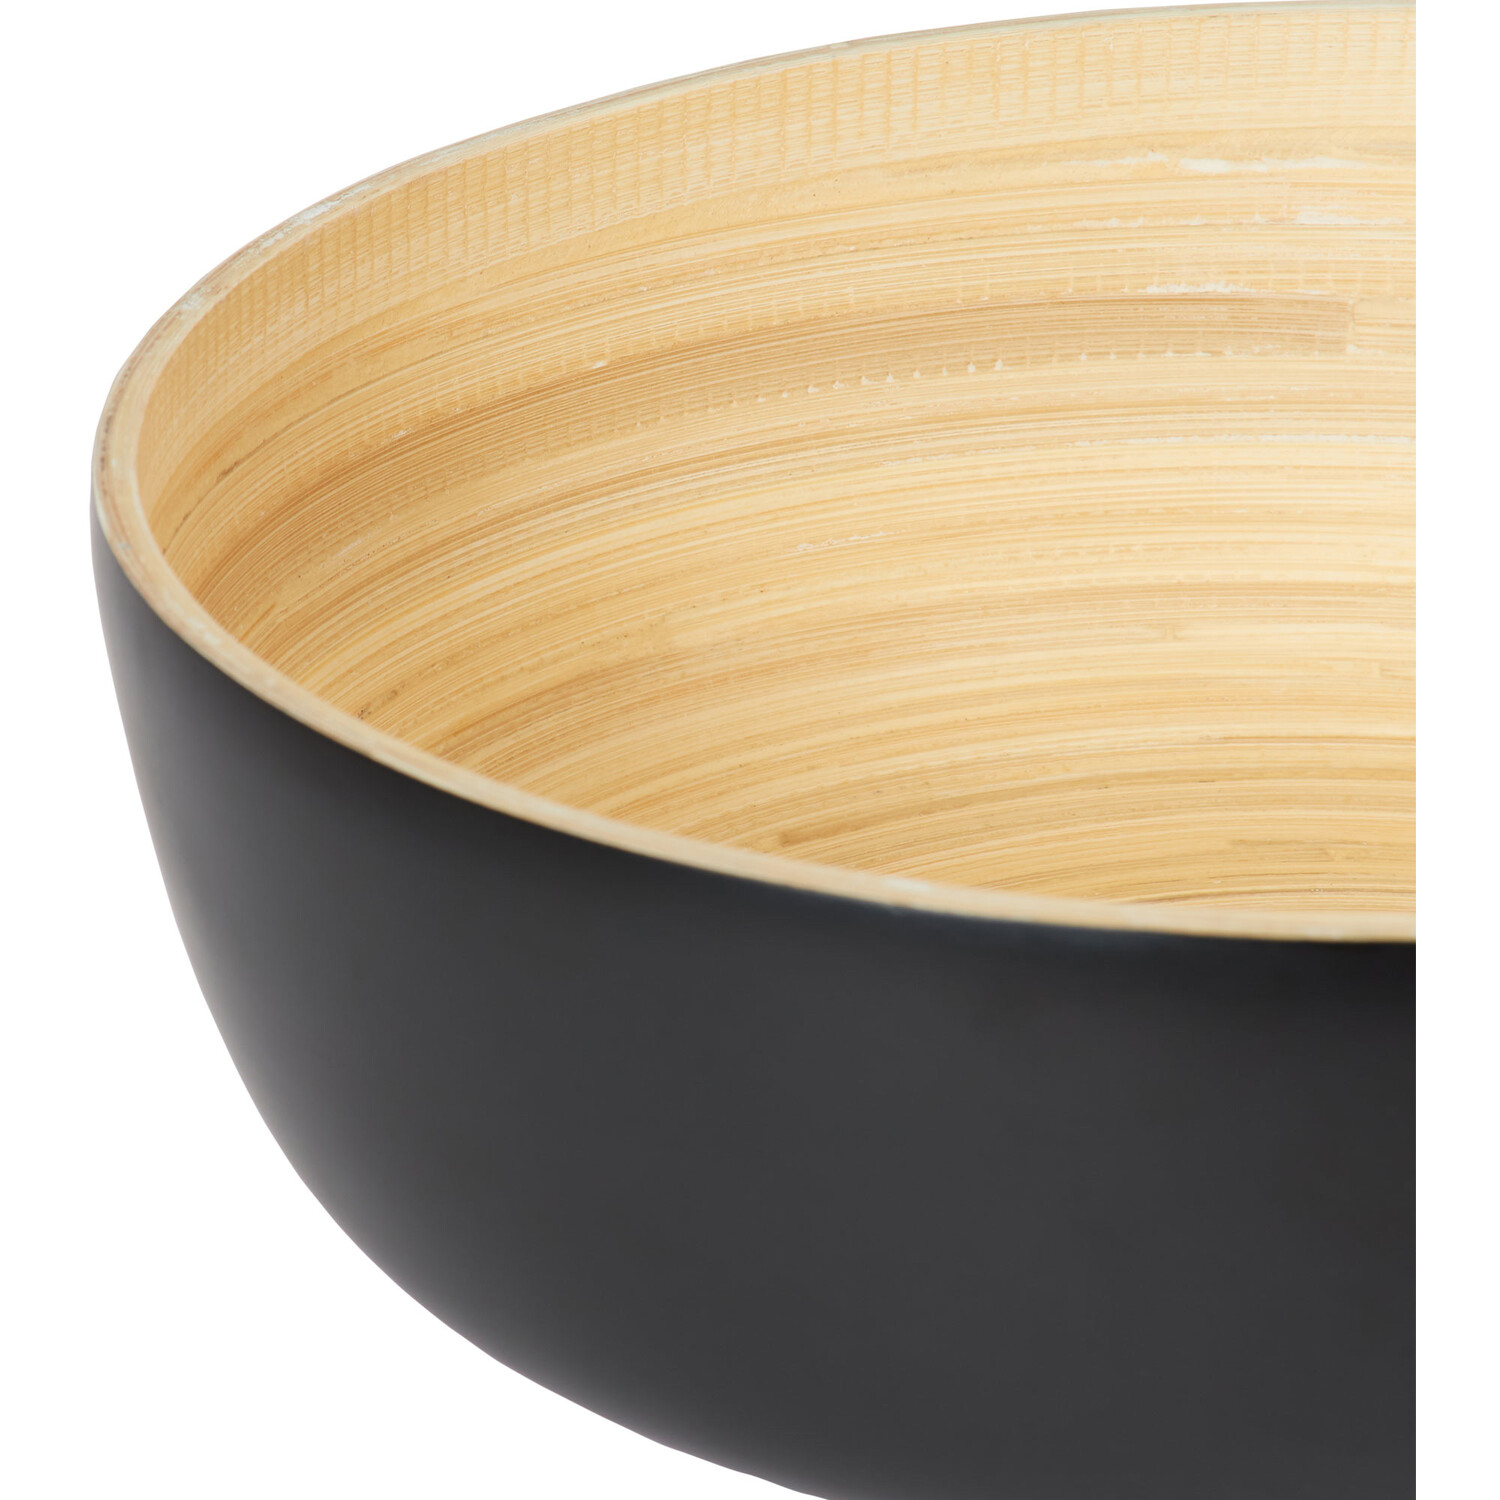 Bamboo Serving Bowl - XL Image 4